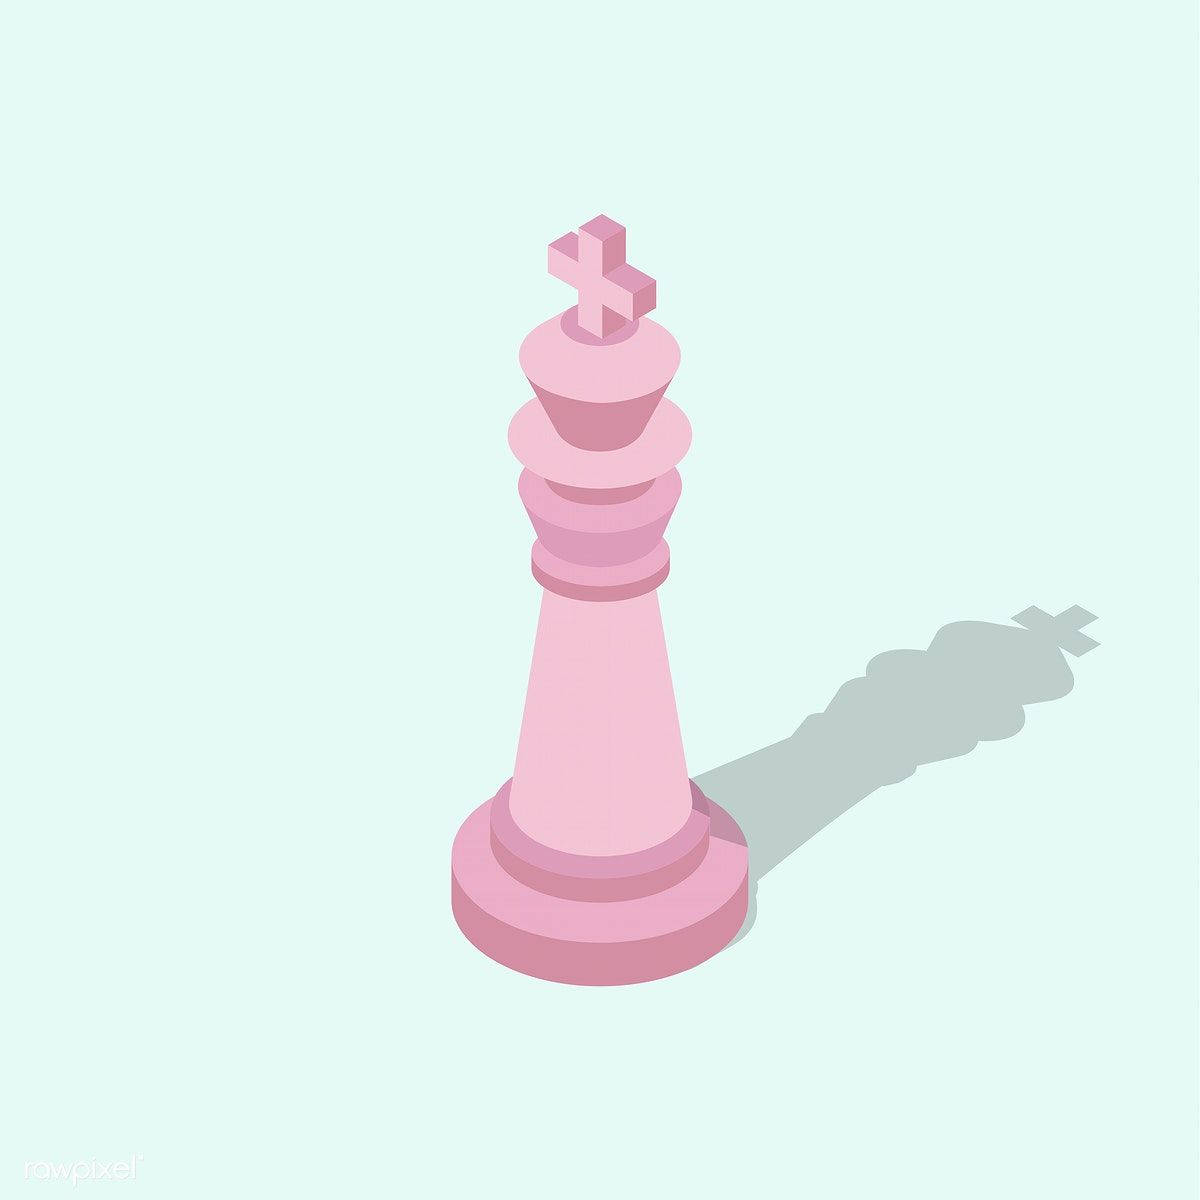 Minimalistic Pink Chess King Wallpaper